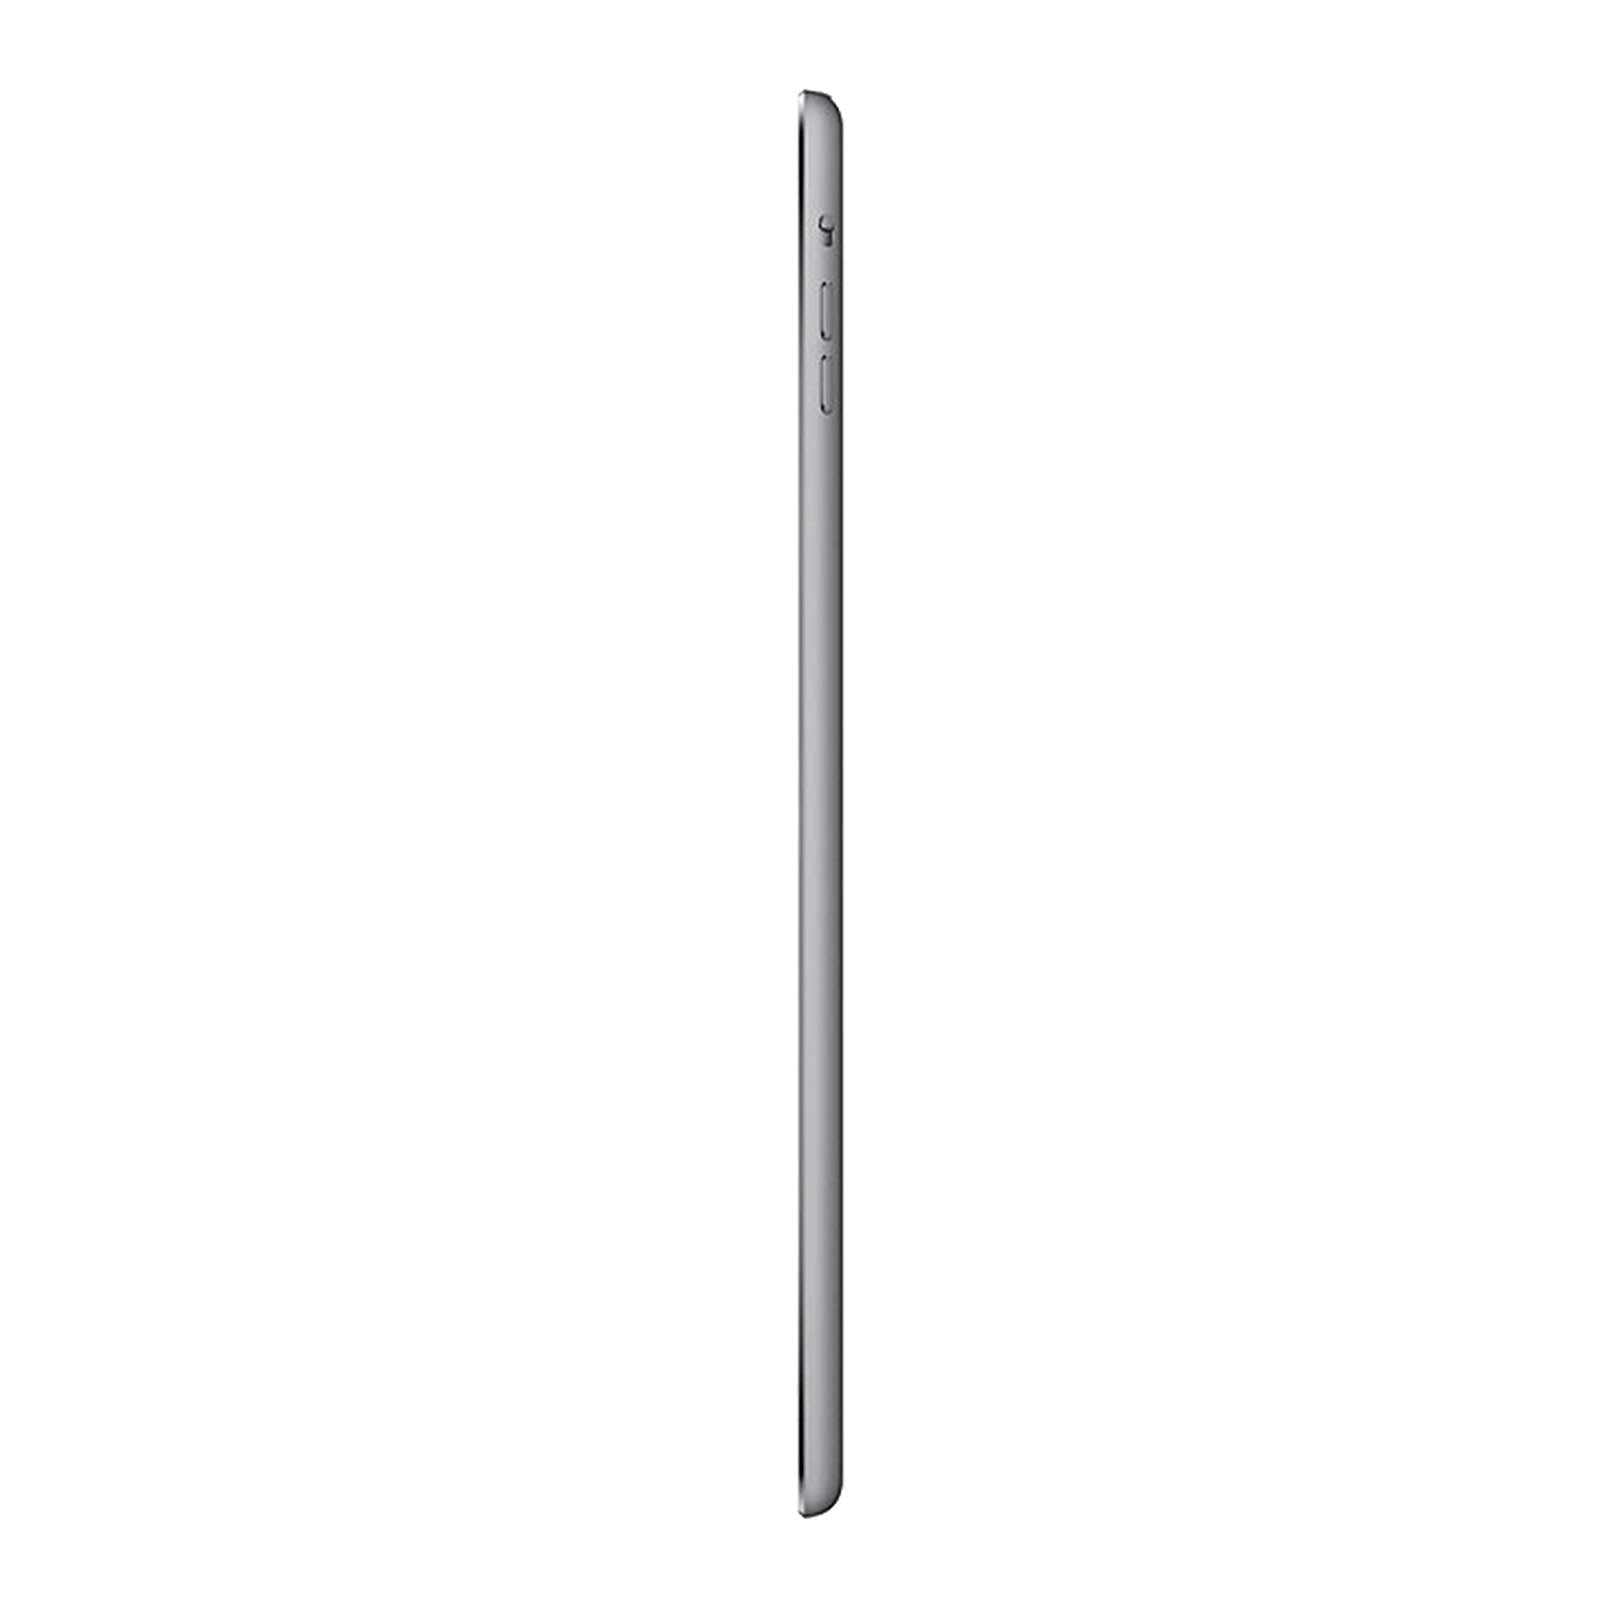 Apple iPad Air 64GB Space Grey Pristine - Unlocked